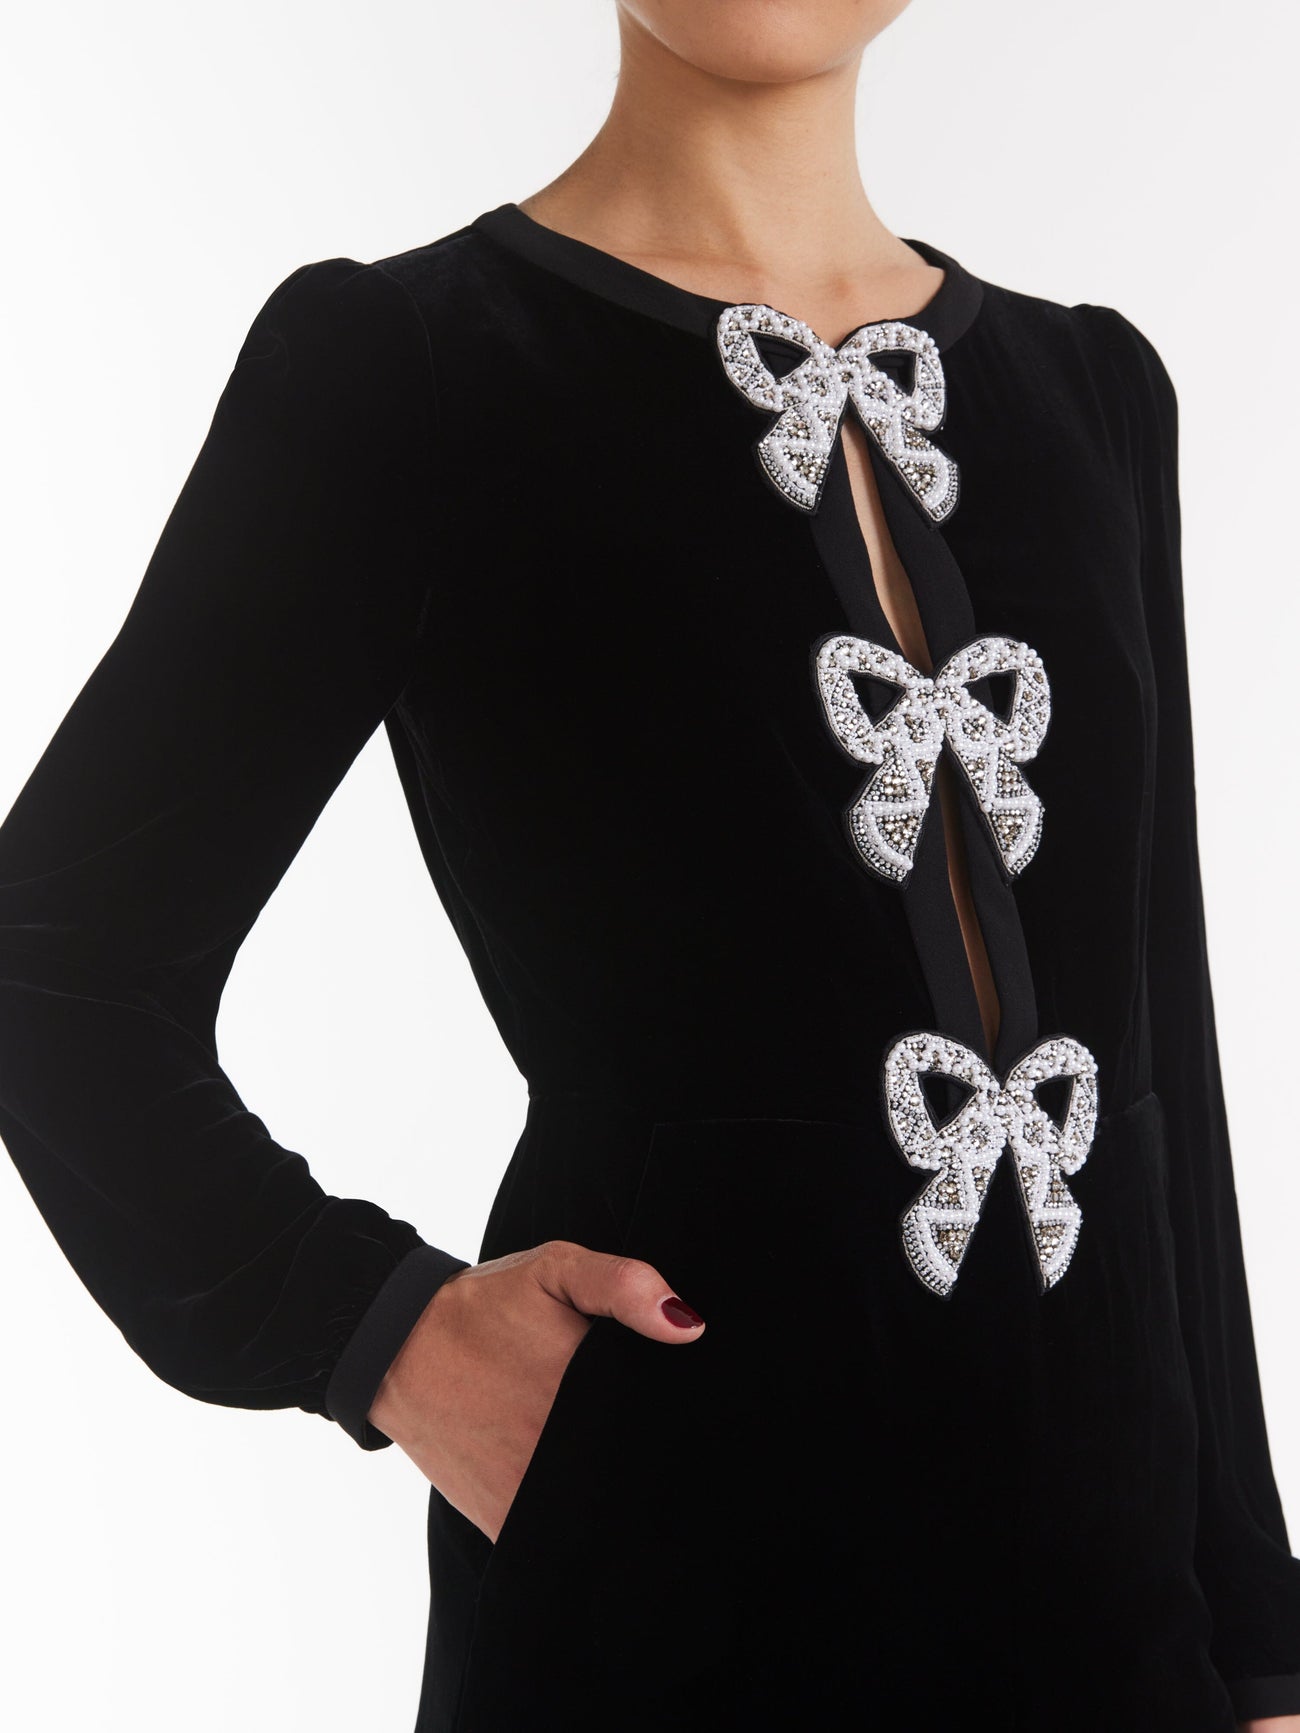 Load image into Gallery viewer, Camille Velvet Embellished Bows Jumpsuit in Black